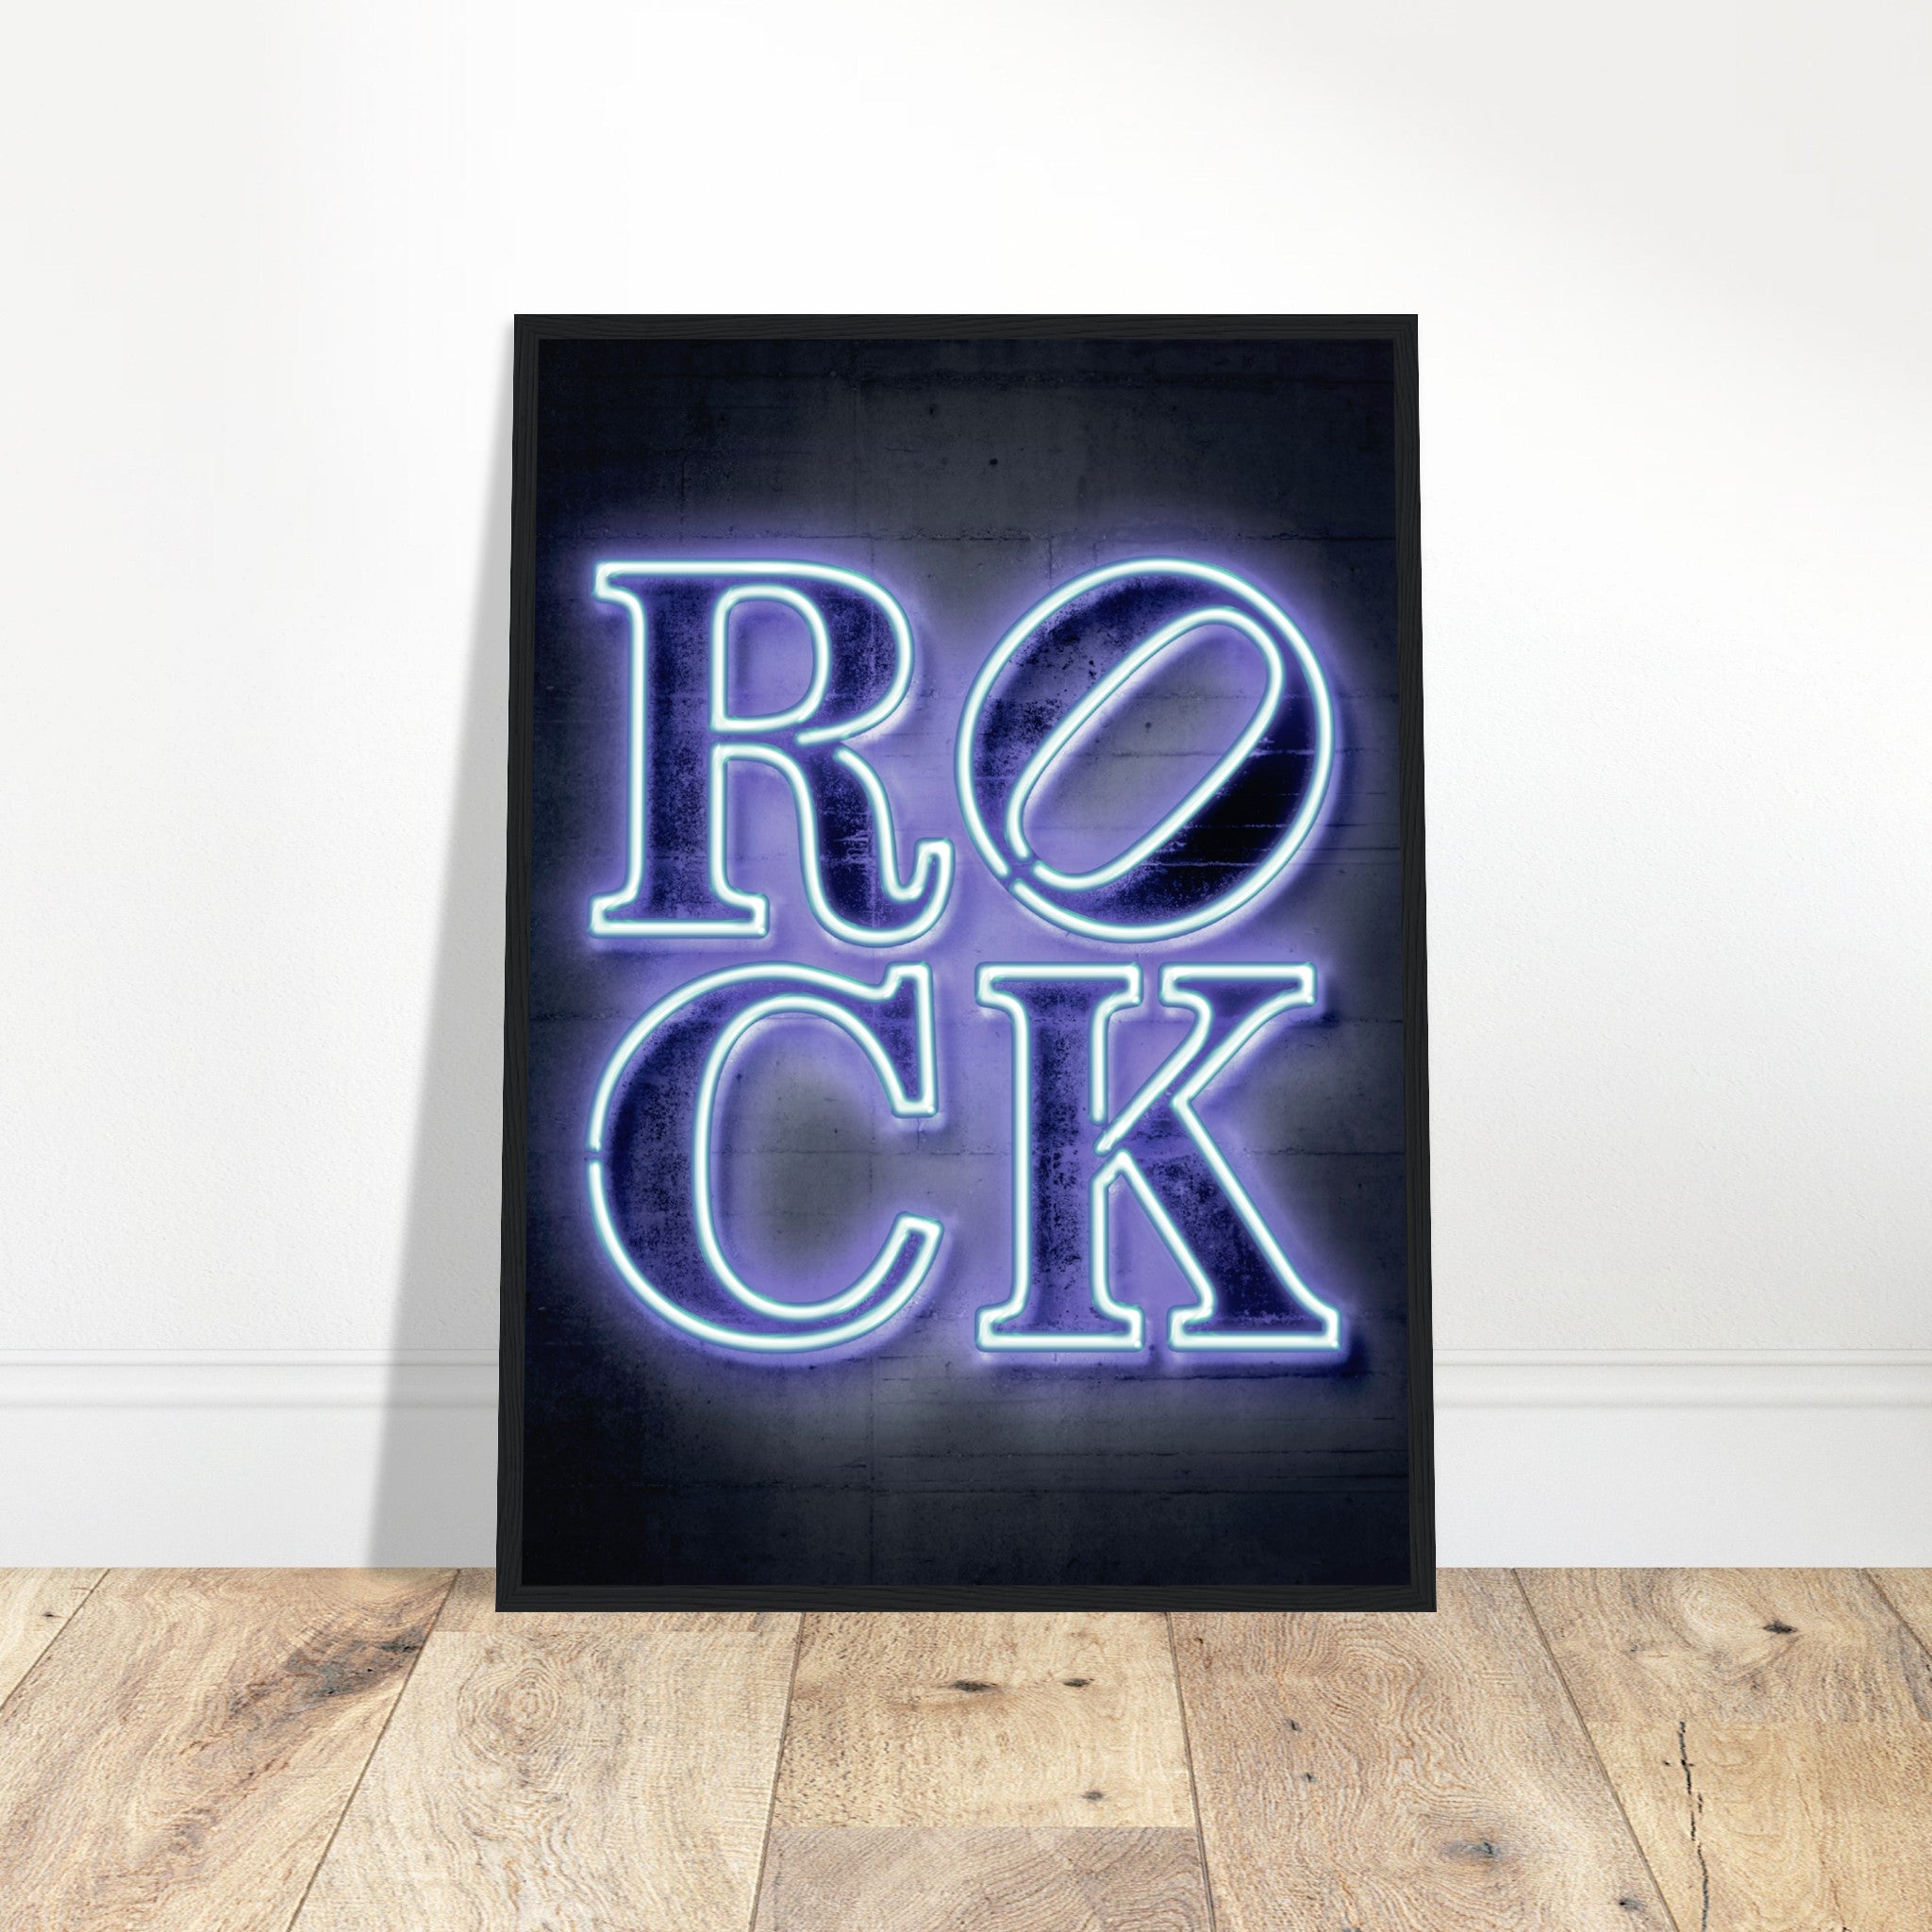 Rock Poster